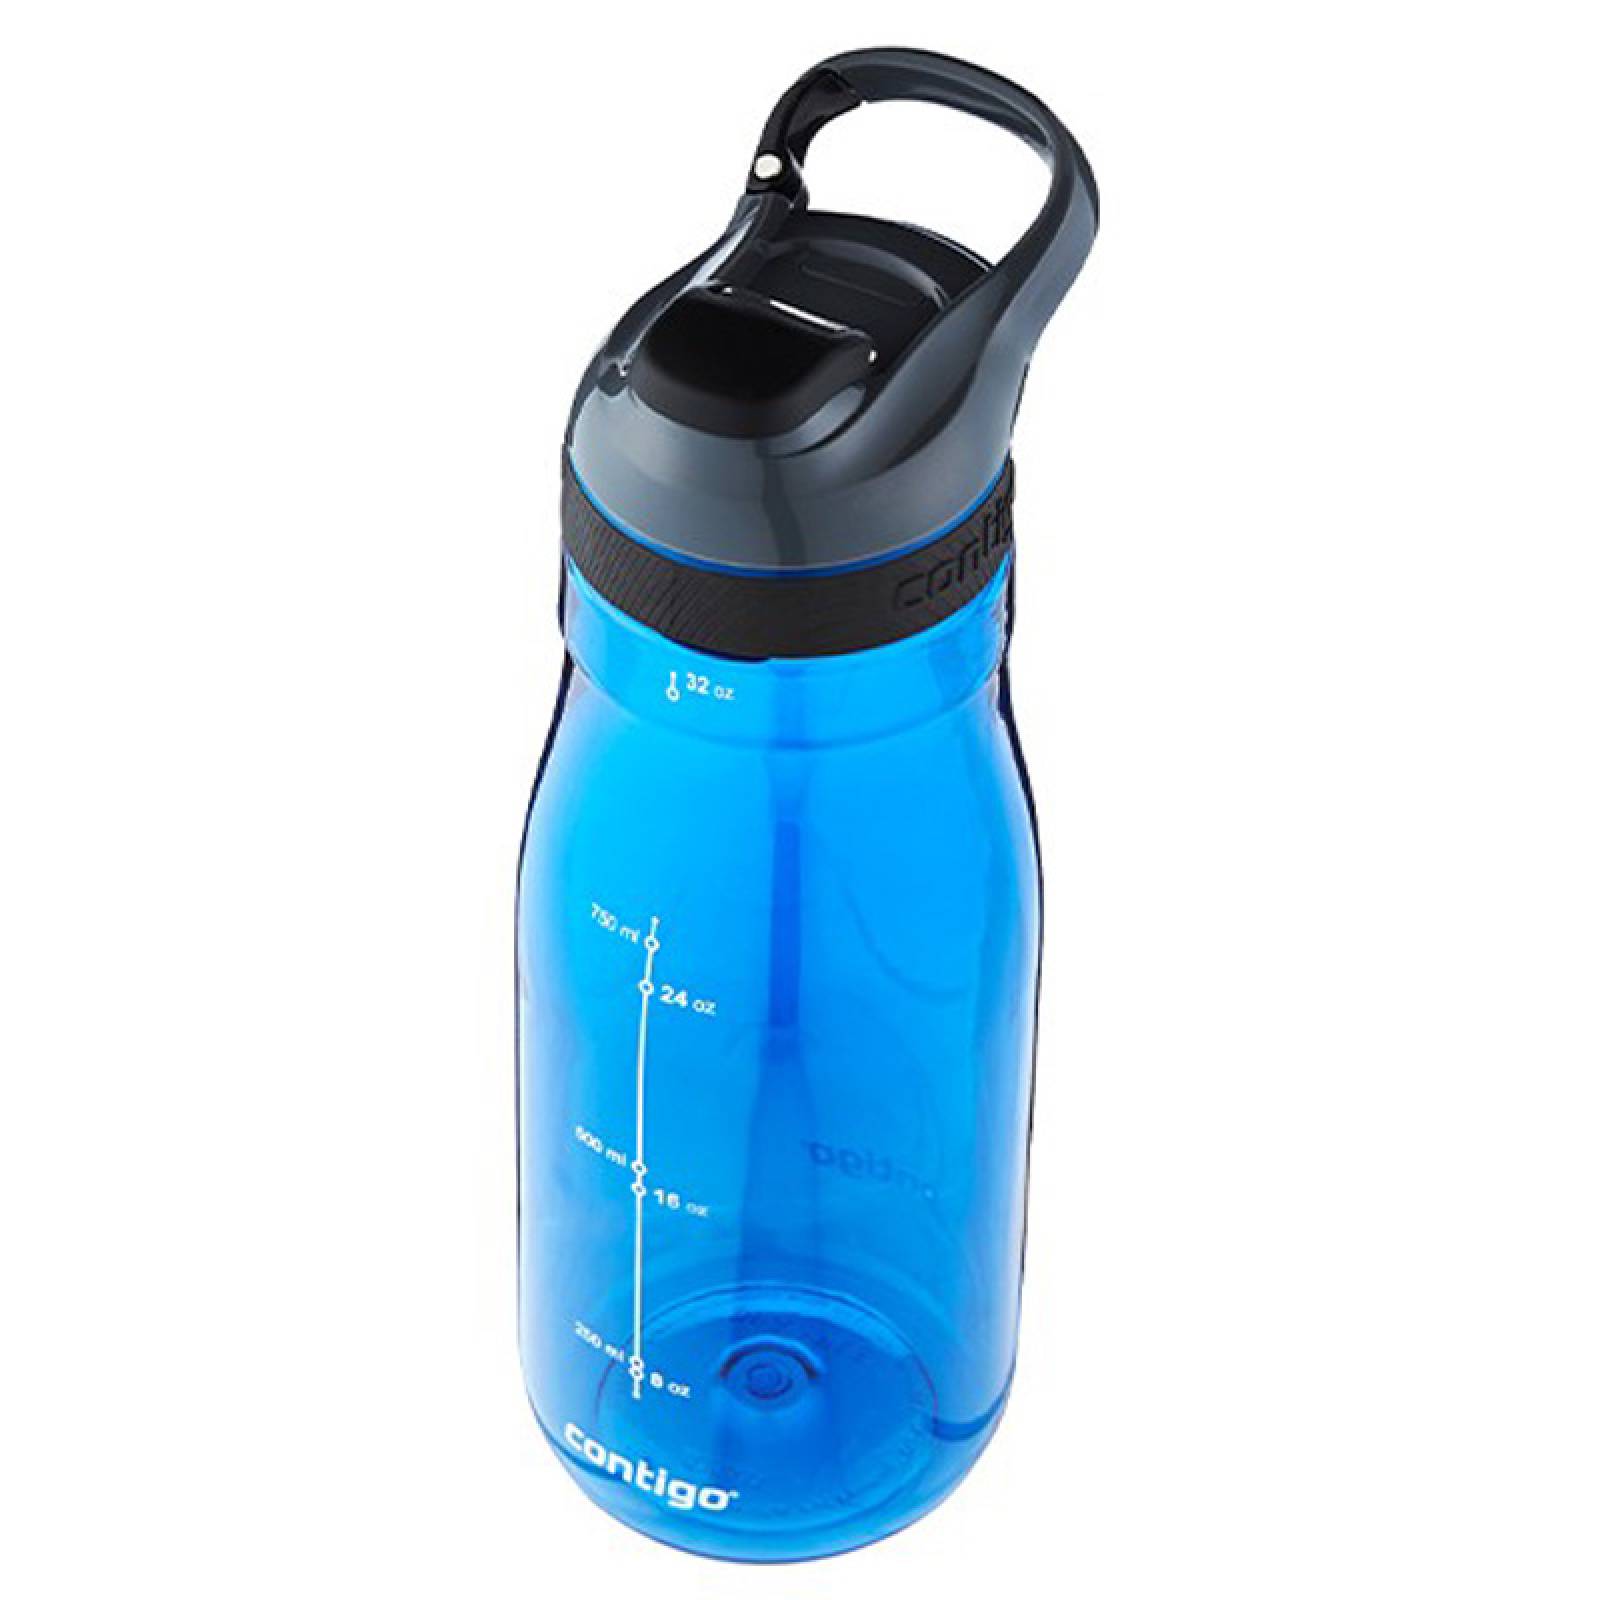 Botella Plastica Autoseal Cortland Azul 946 Ml Contigo 